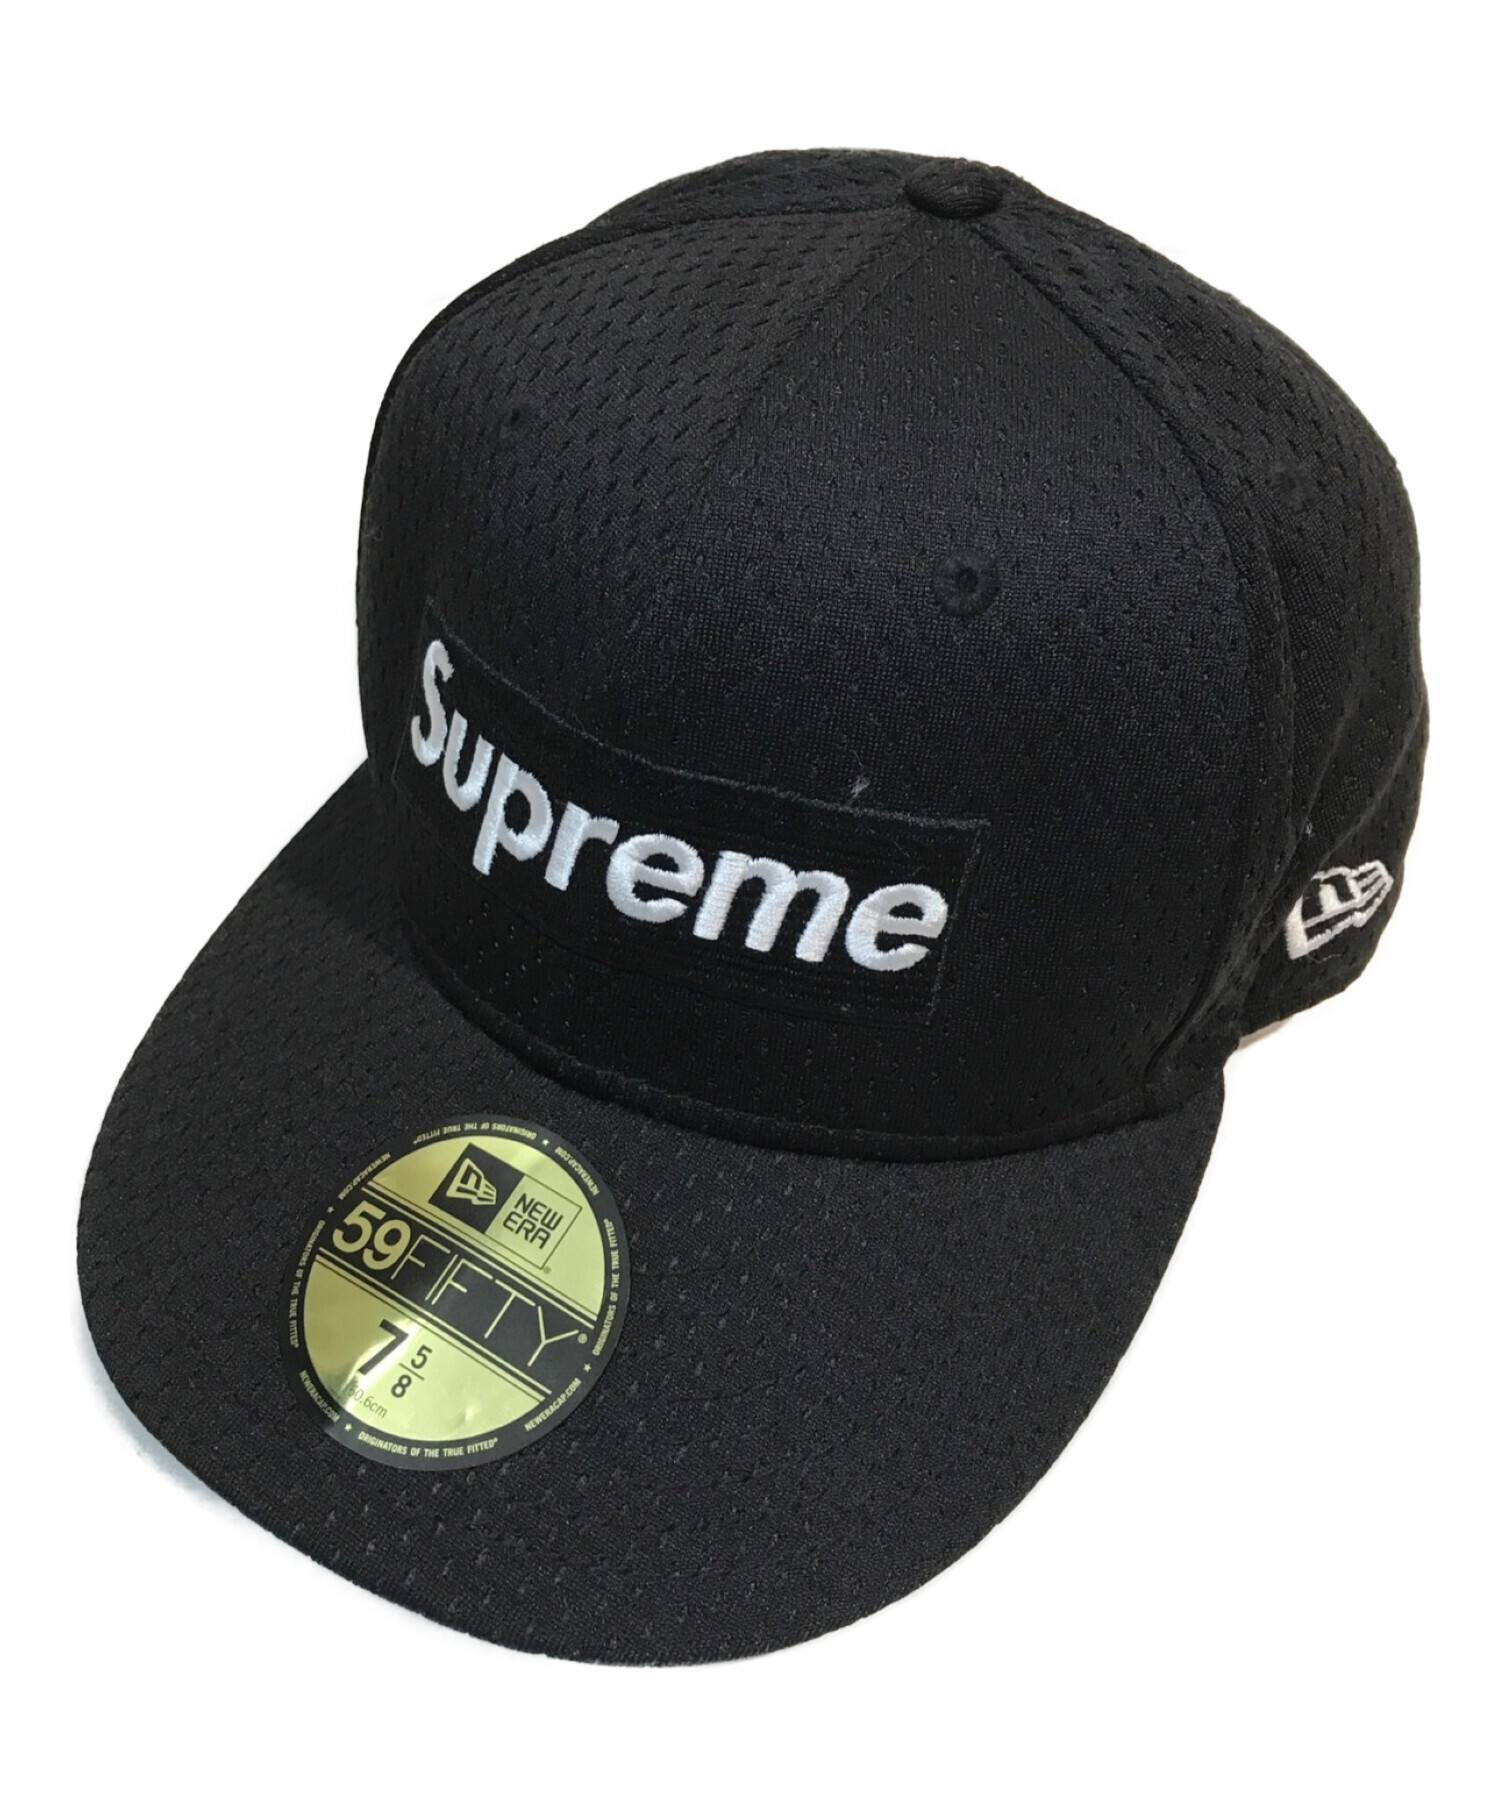 希少 Supreme S Logo New Era 7 5/8 XL BLACK